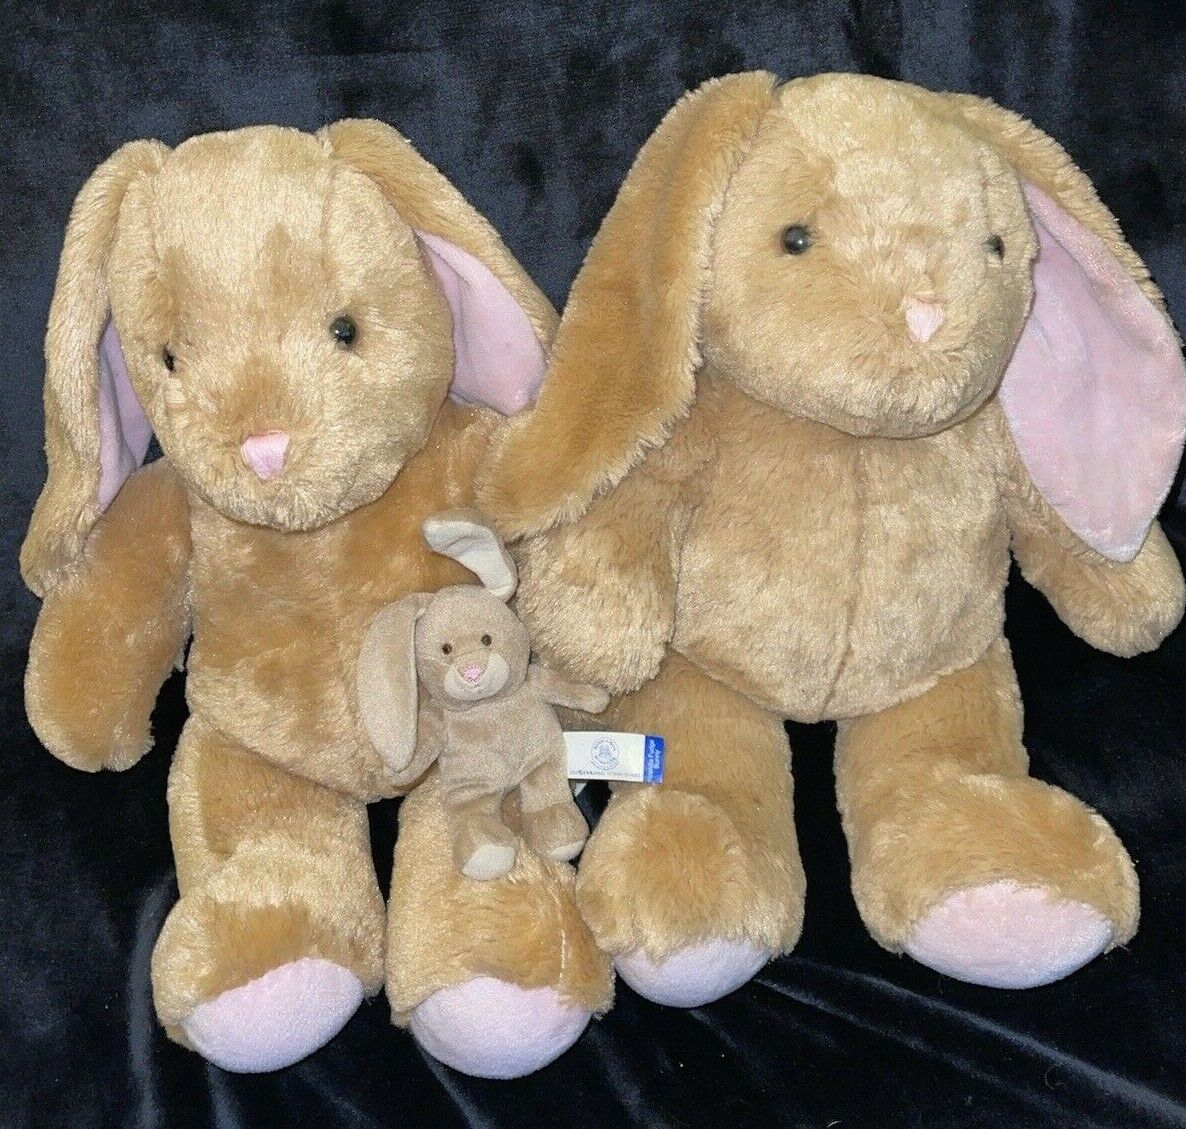 Lot of 3 Build-A-Bear Floppy Ear Tan Easter Bunny Rabbits Plush Stuffed Animals Build-A-Bear Workshop